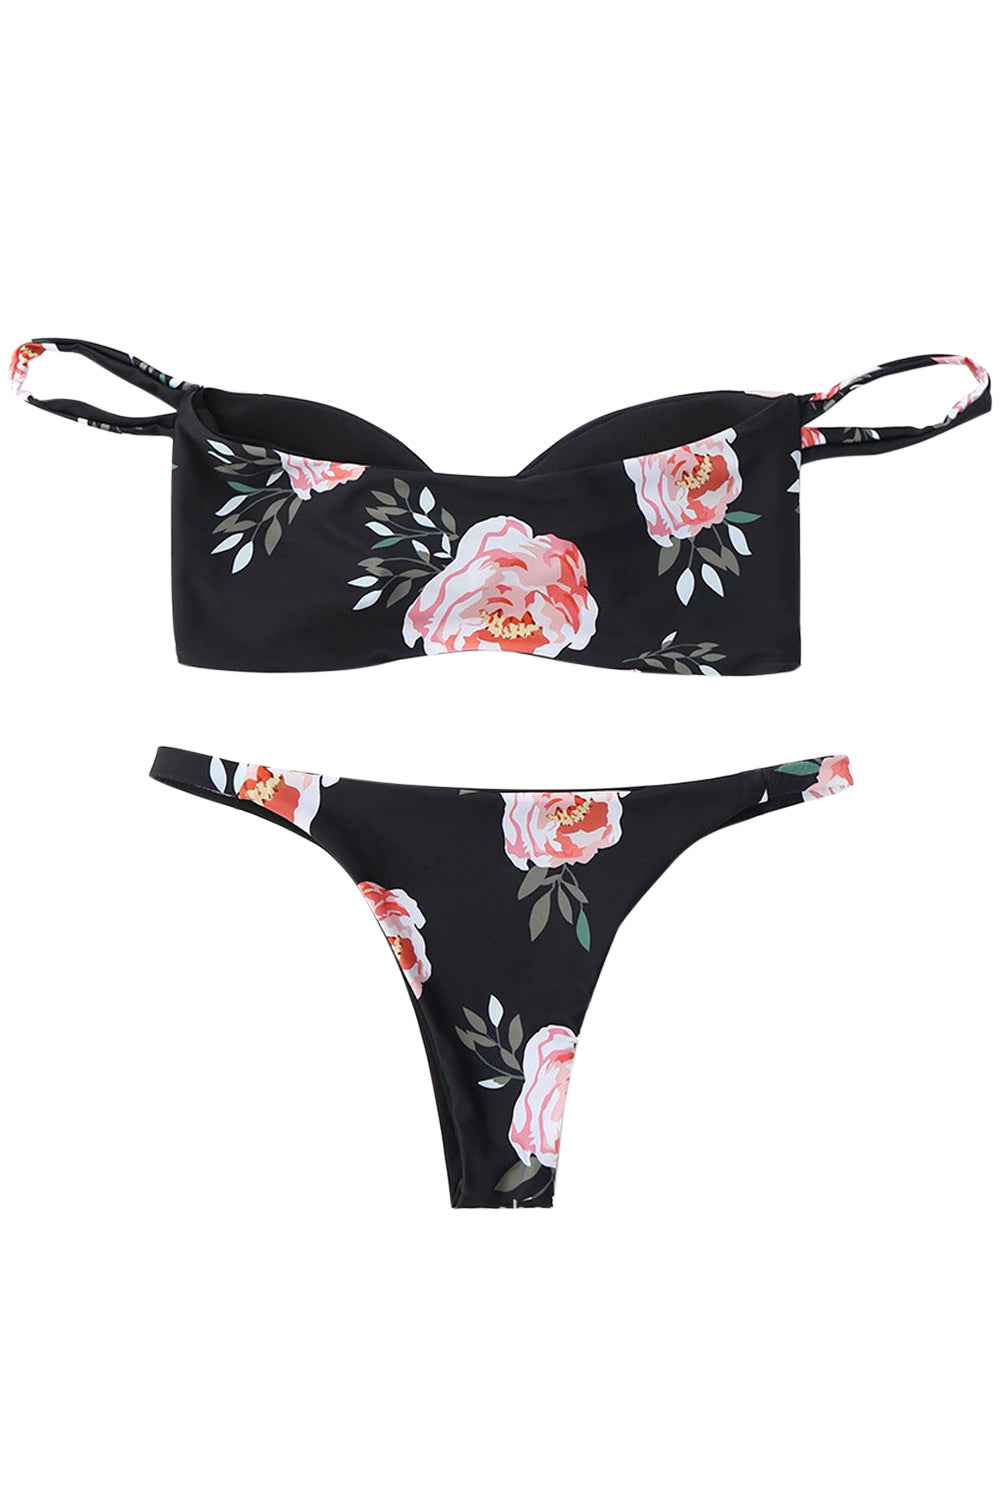 Iyasson  Summer Floral Bikini Set